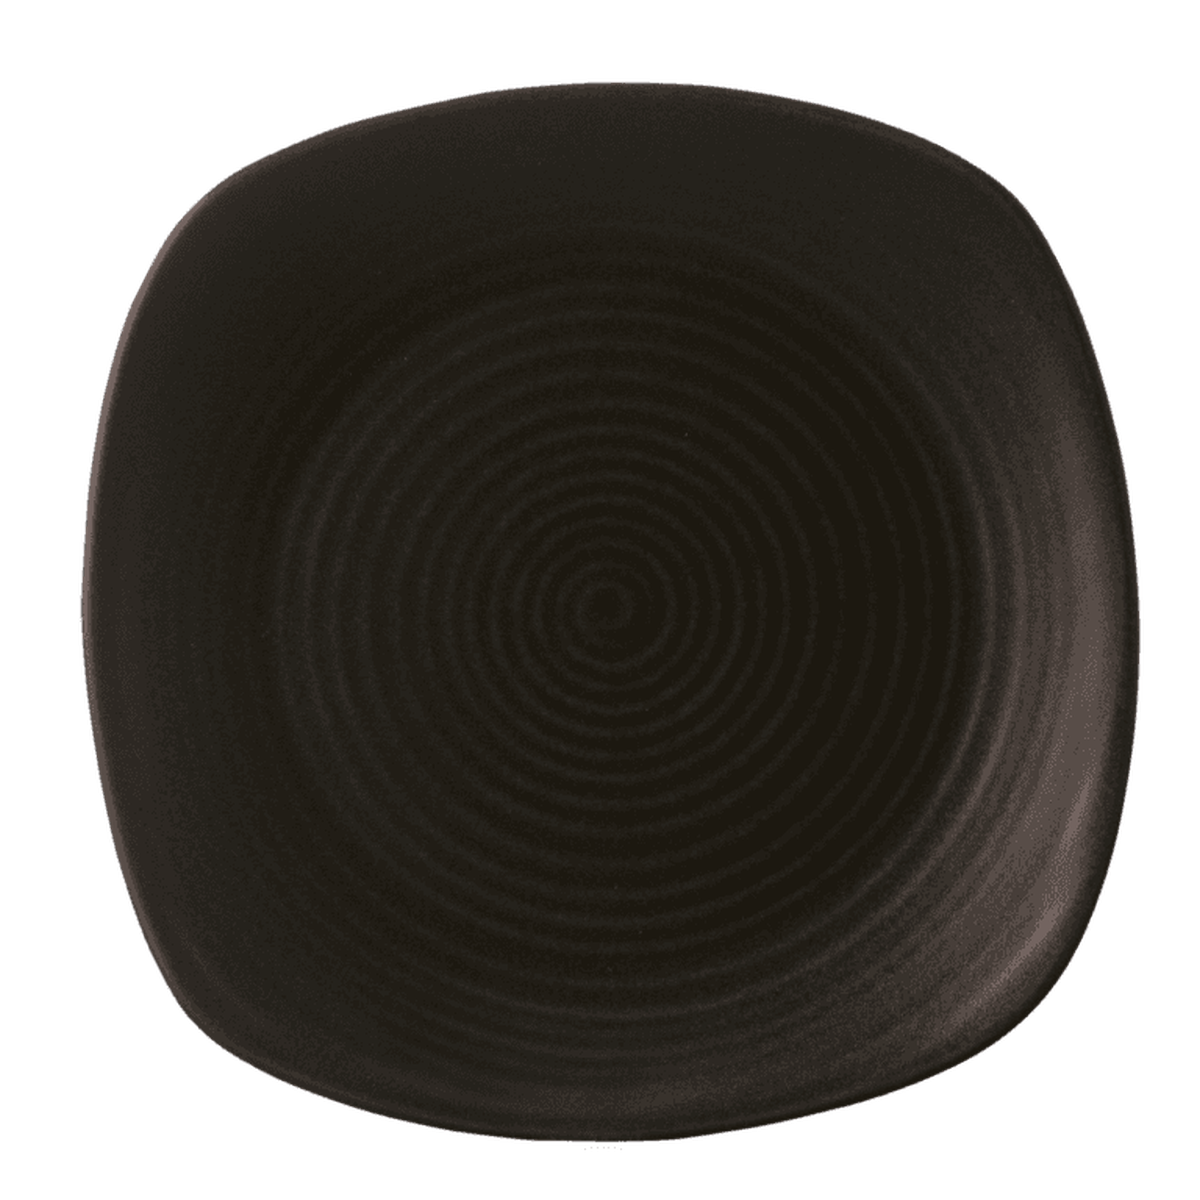 Тарелка длинная. Hconcep тарелка квадратная 26 см арт.SZL 109-1. Черные квадратные тарелки. Тарелка прямоугольная черная. Тарелка черная.